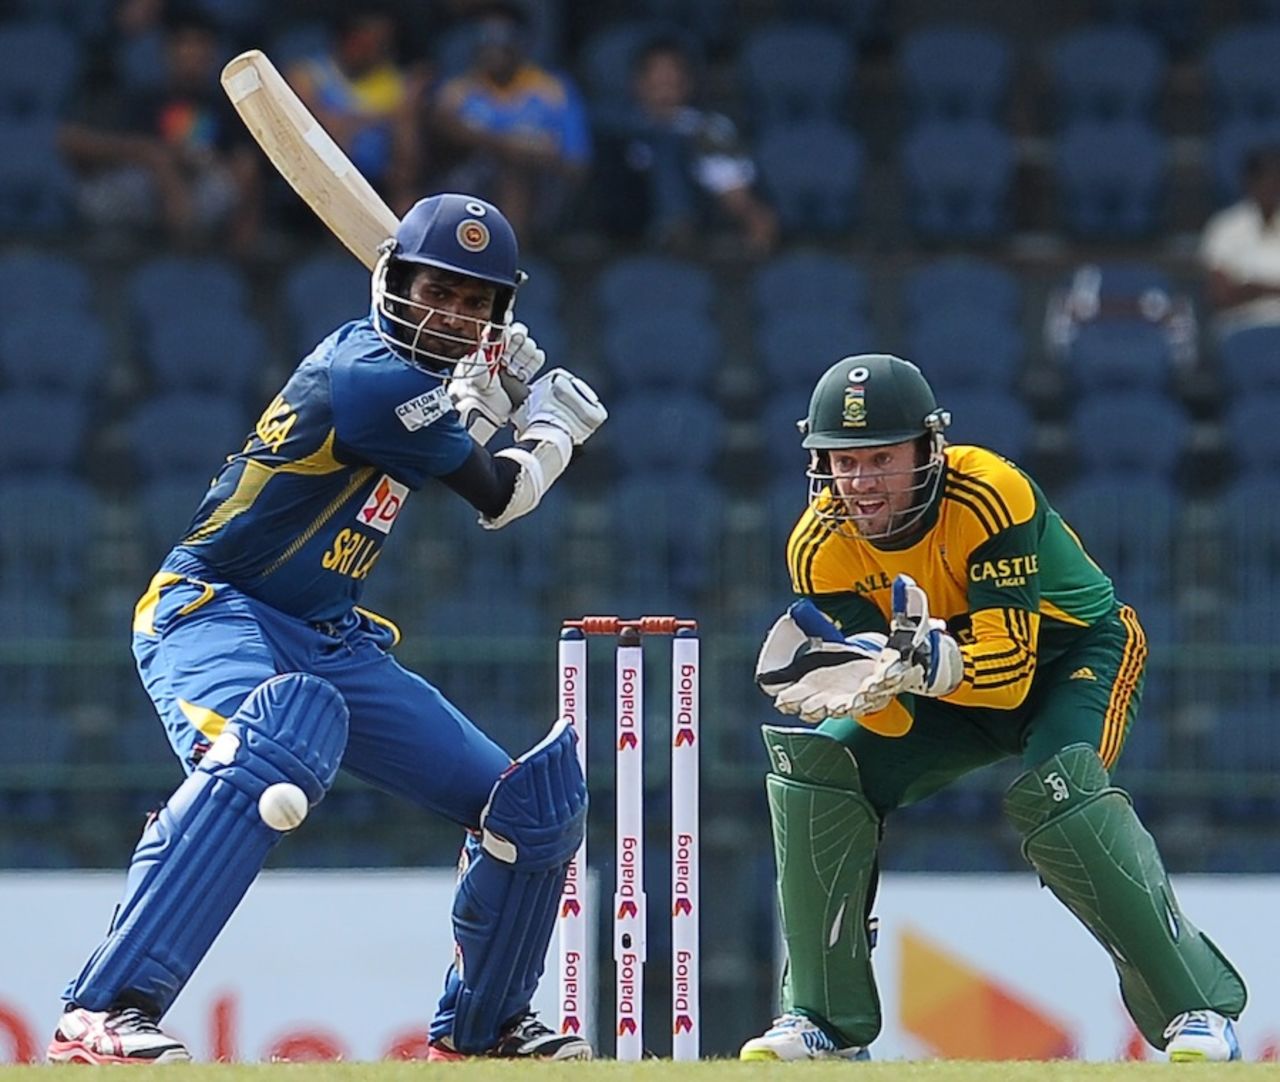 Upul Tharanga gets into position to play a shot, Sri Lanka v South Africa, 1st ODI, Colombo, July 20, 2013